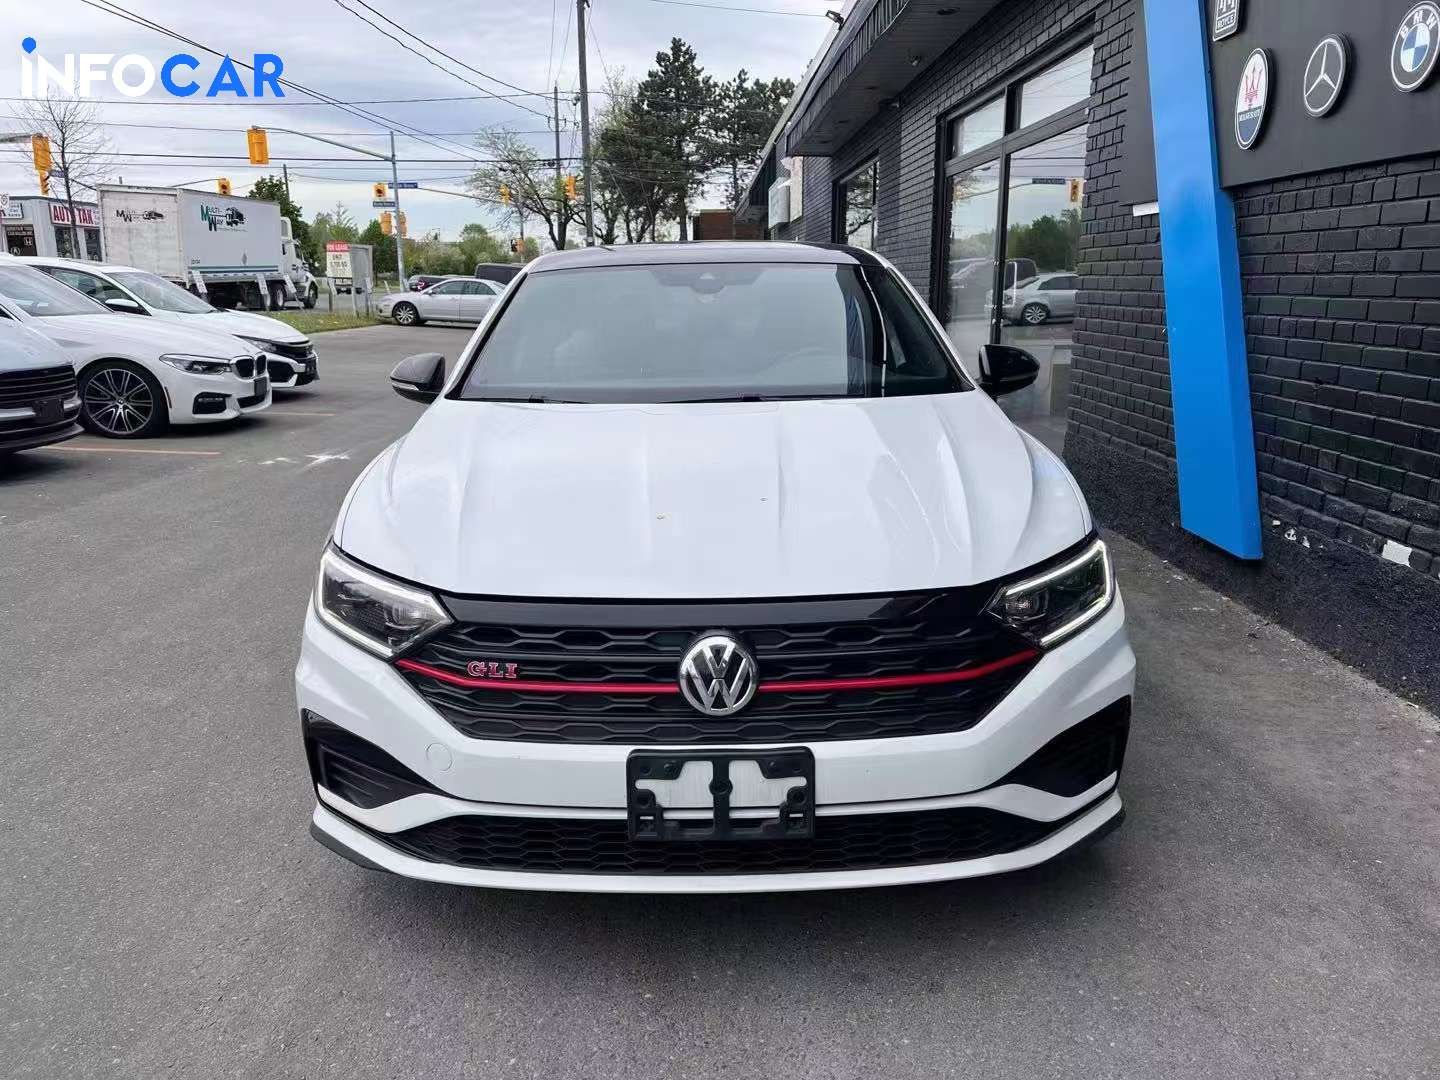 2019 Volkswagen Jetta GLI - INFOCAR - Toronto Auto Trading Platform